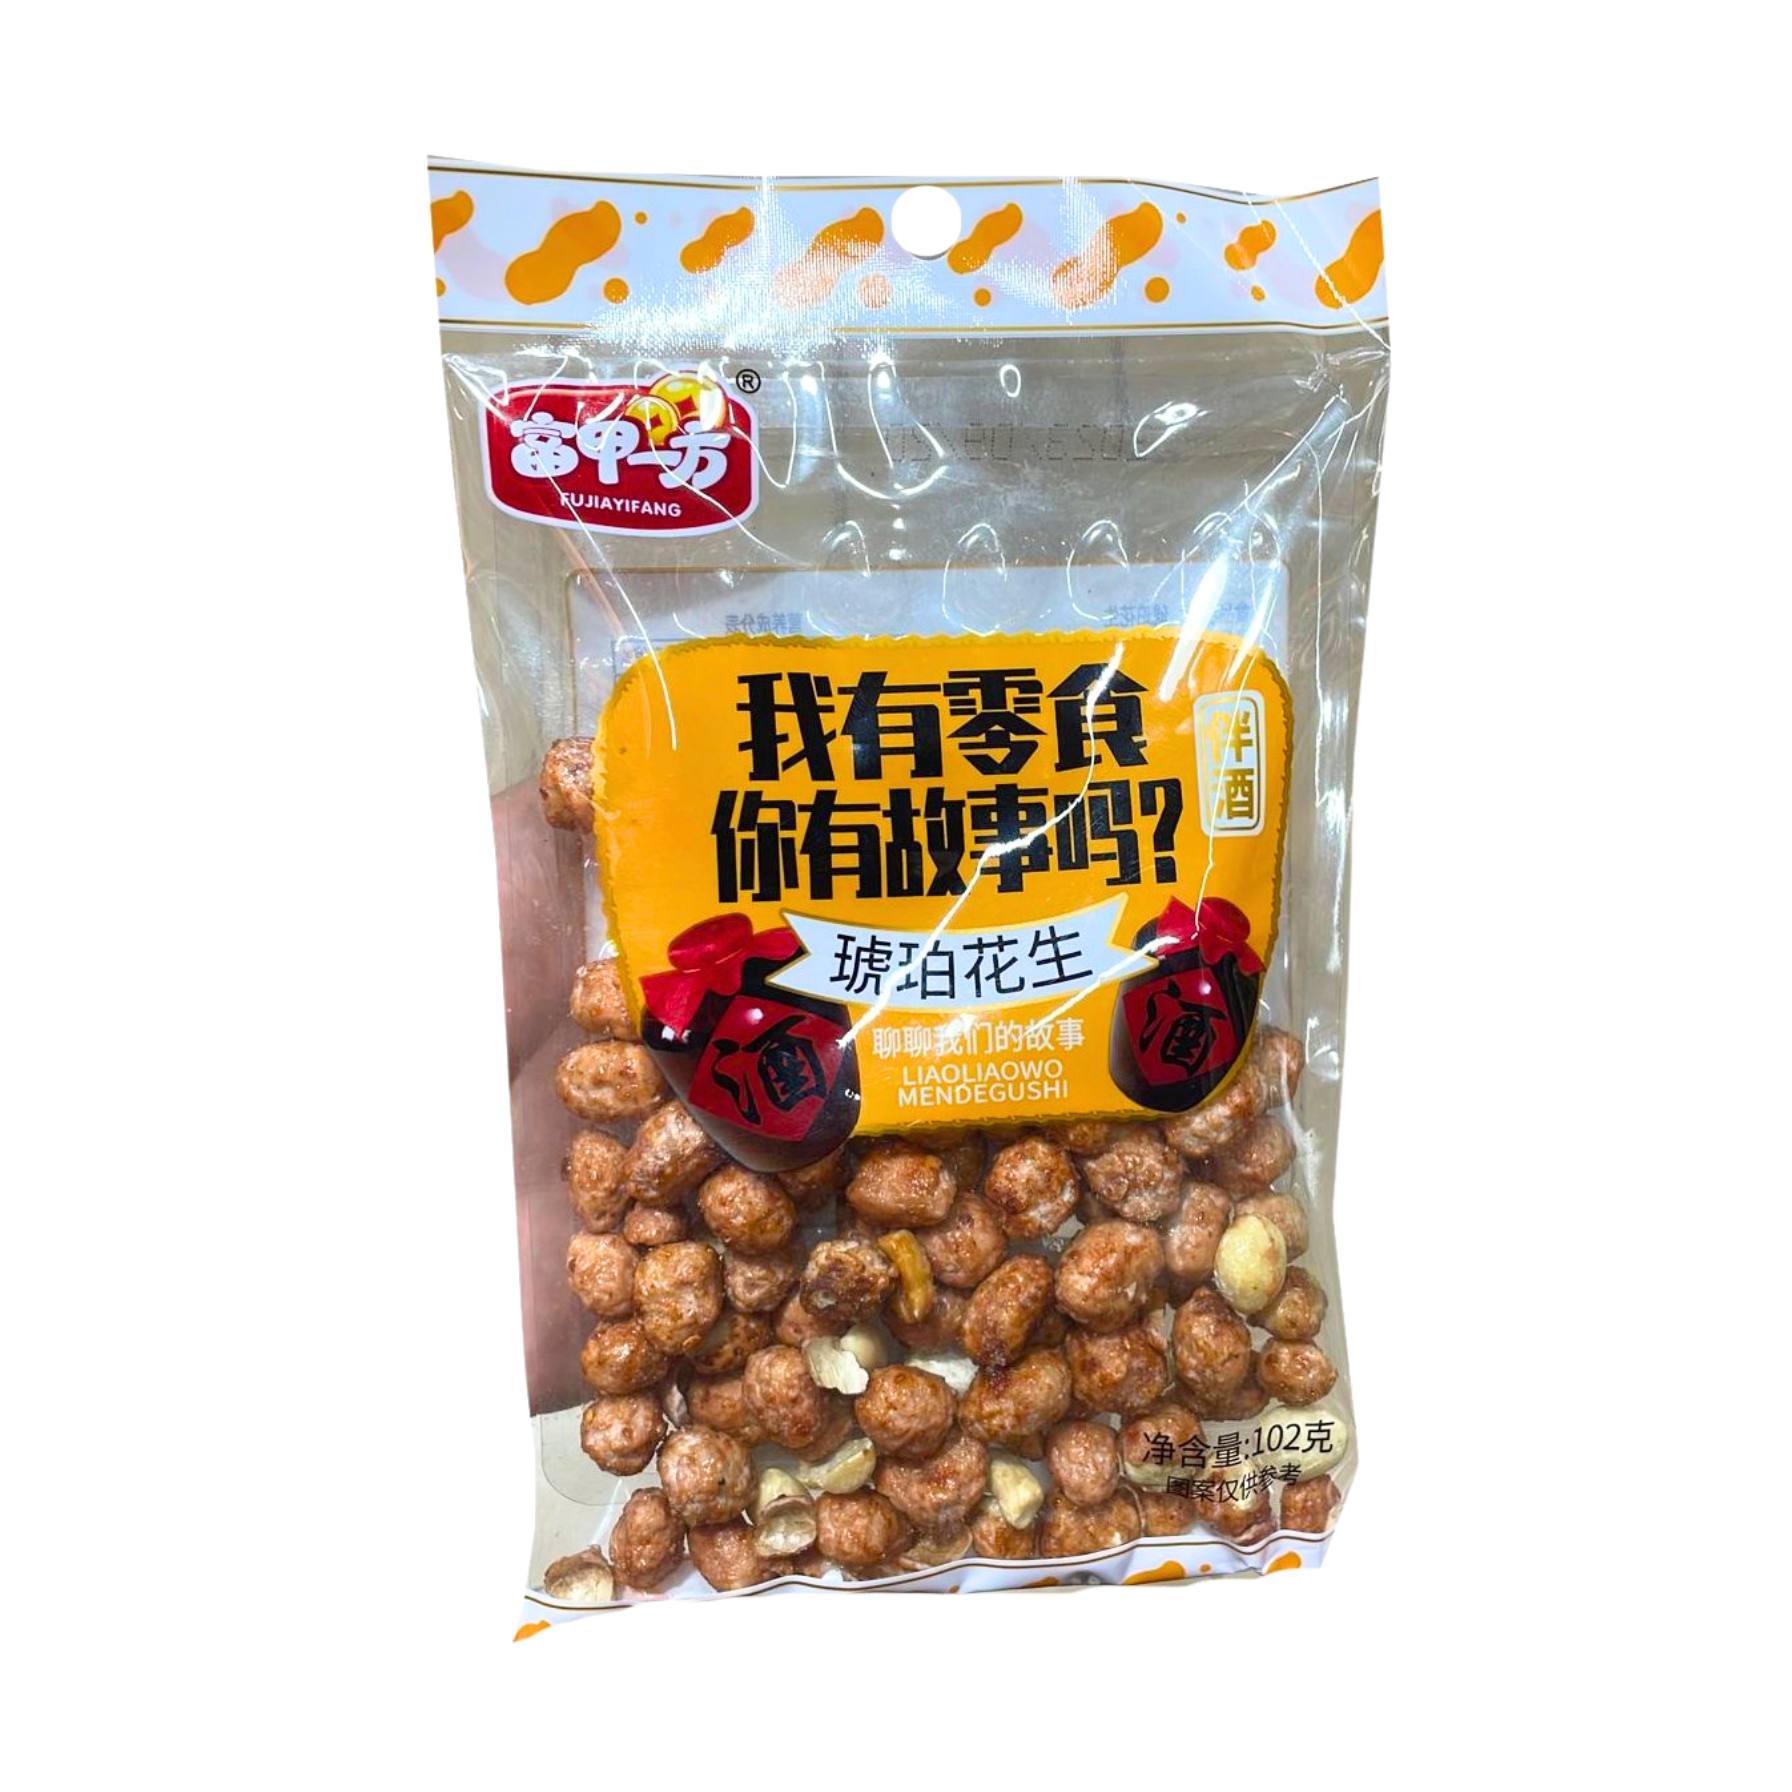 Amendoim crocante apimentado - Fujiayifang 102g